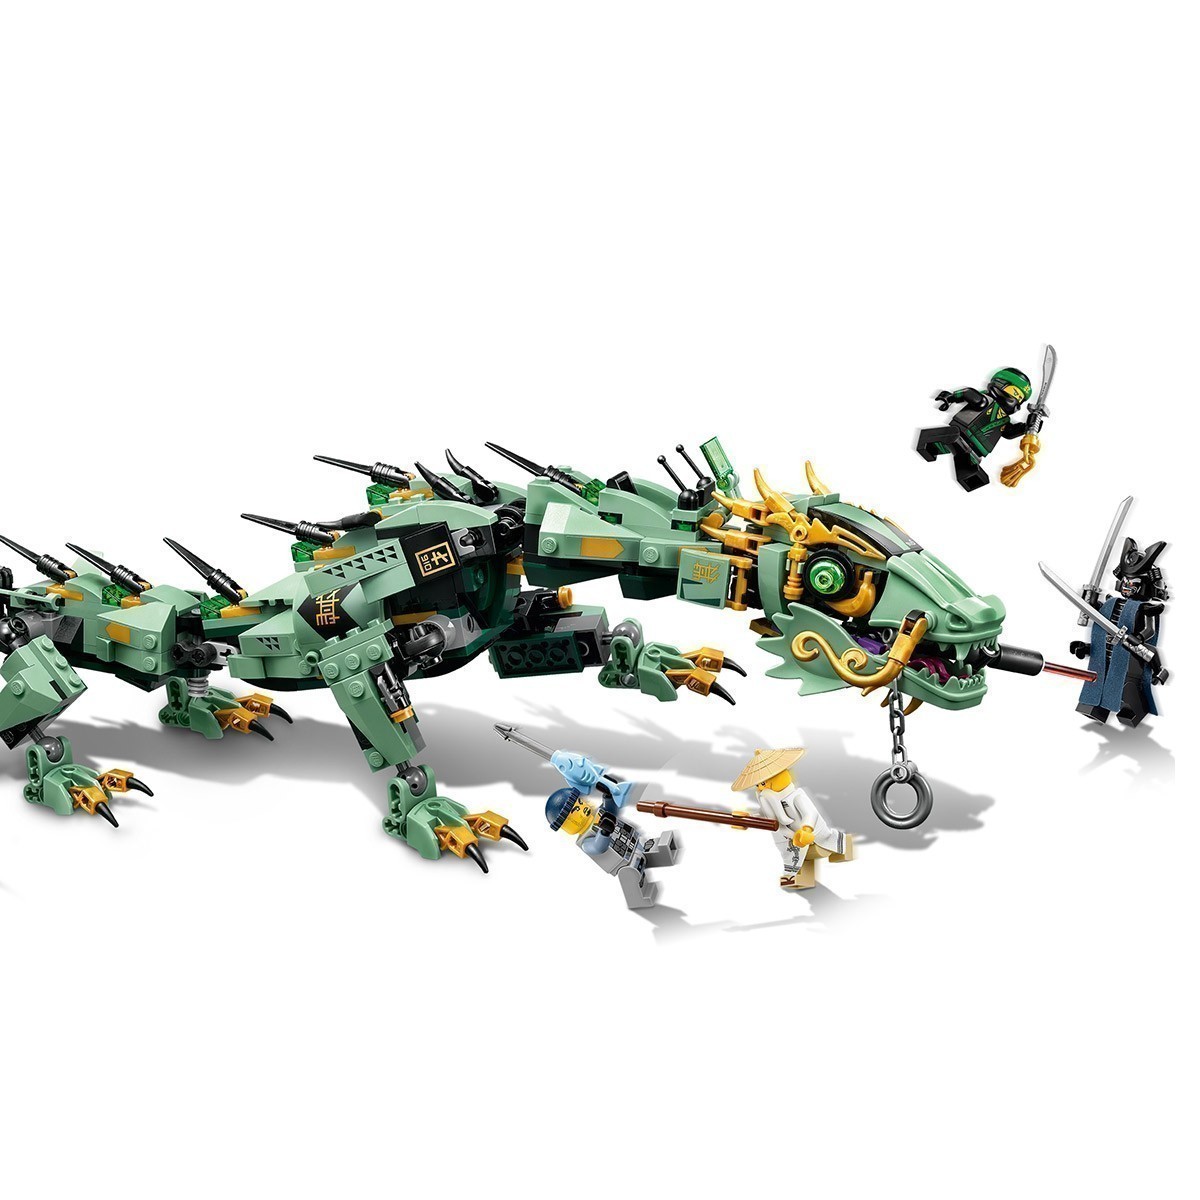 LEGO - The Ninjago Movie 70612 - Green Ninja Mech Dragon